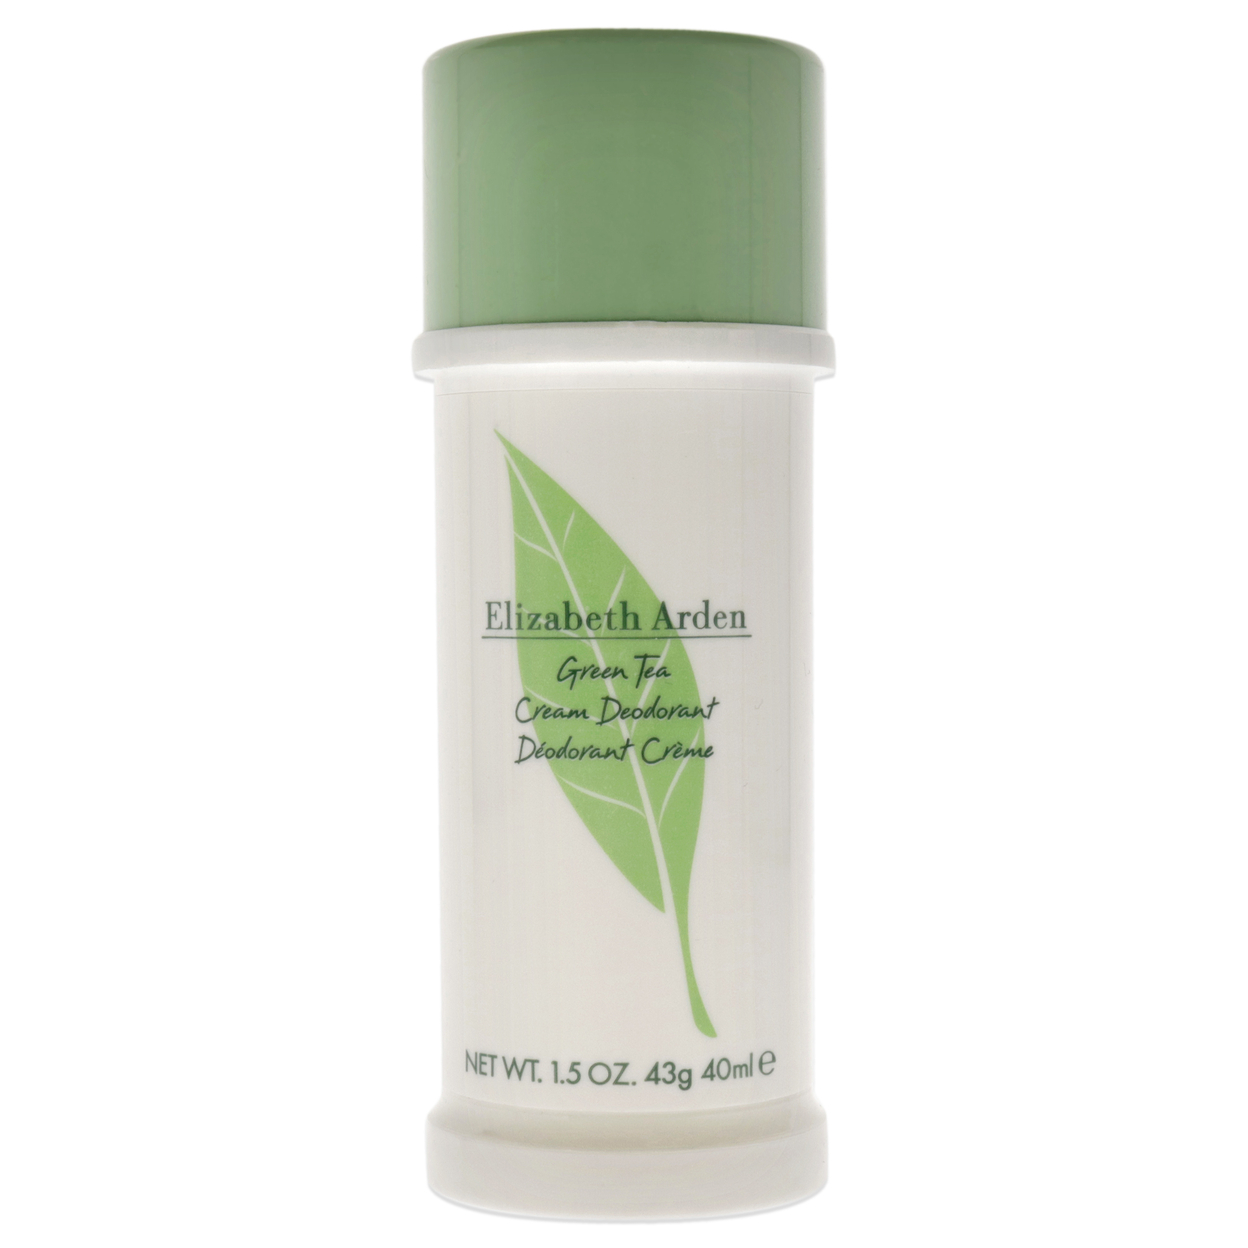 Green Tea by Elizabeth Arden for Women - 1.5 oz Cream Deodorant - image 1 of 3